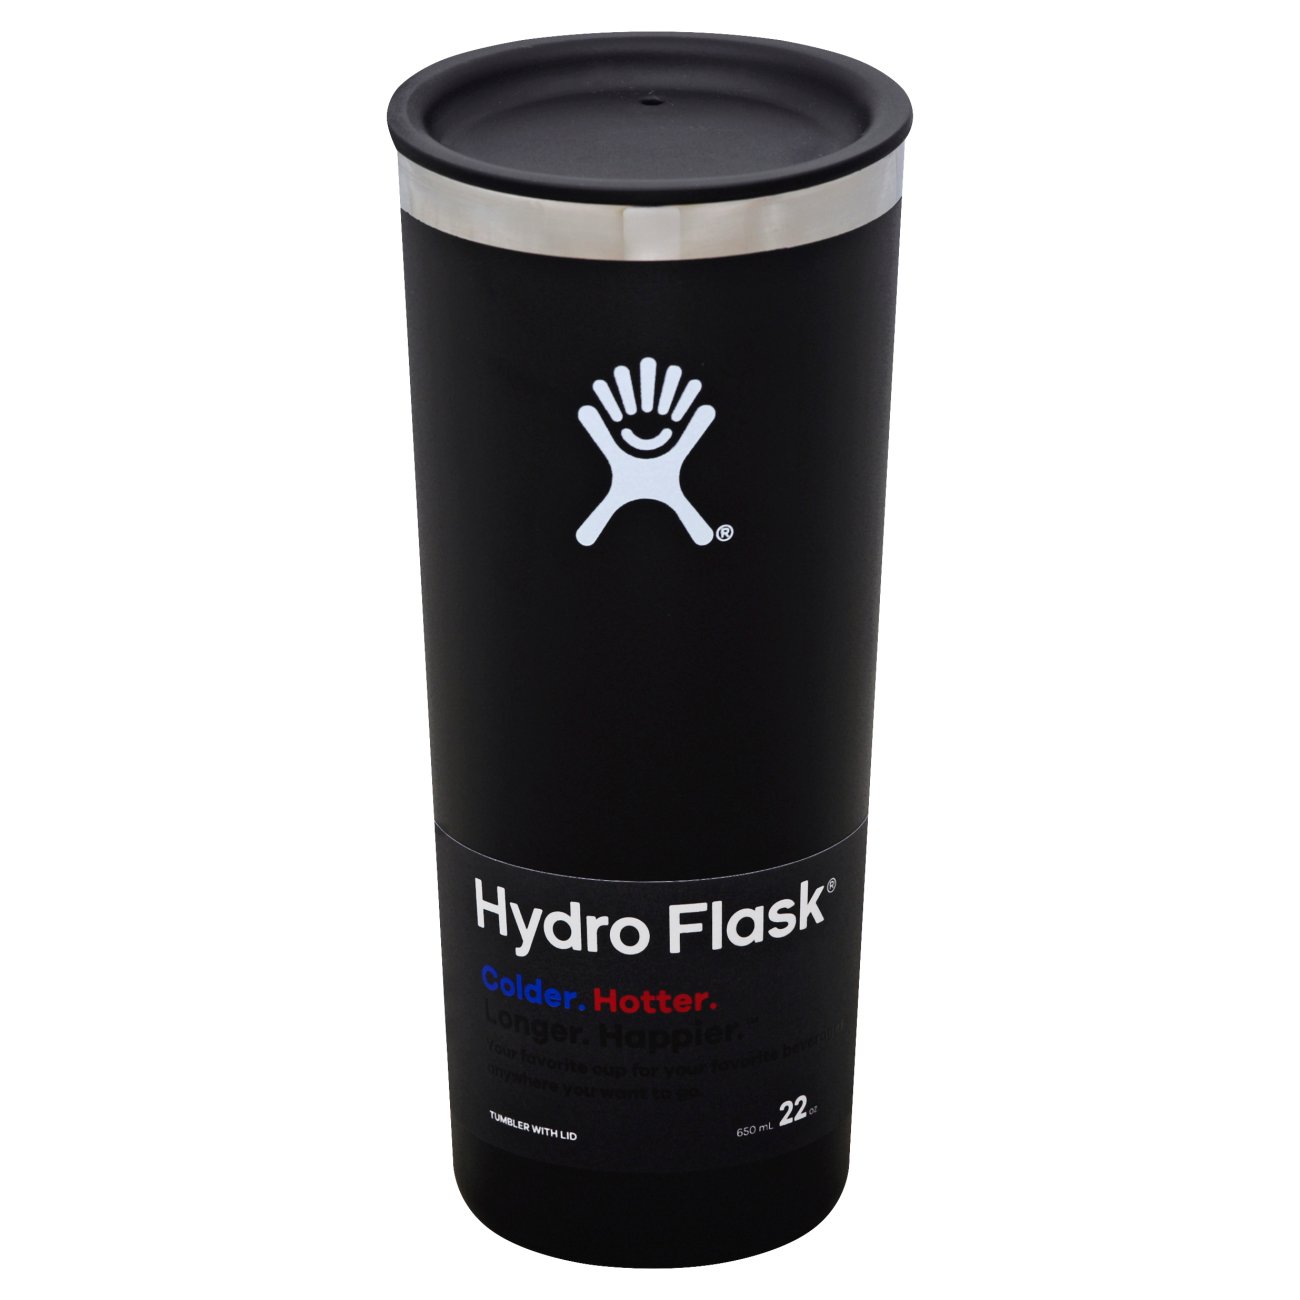 Hydro Flask Tumbler - 22 oz.